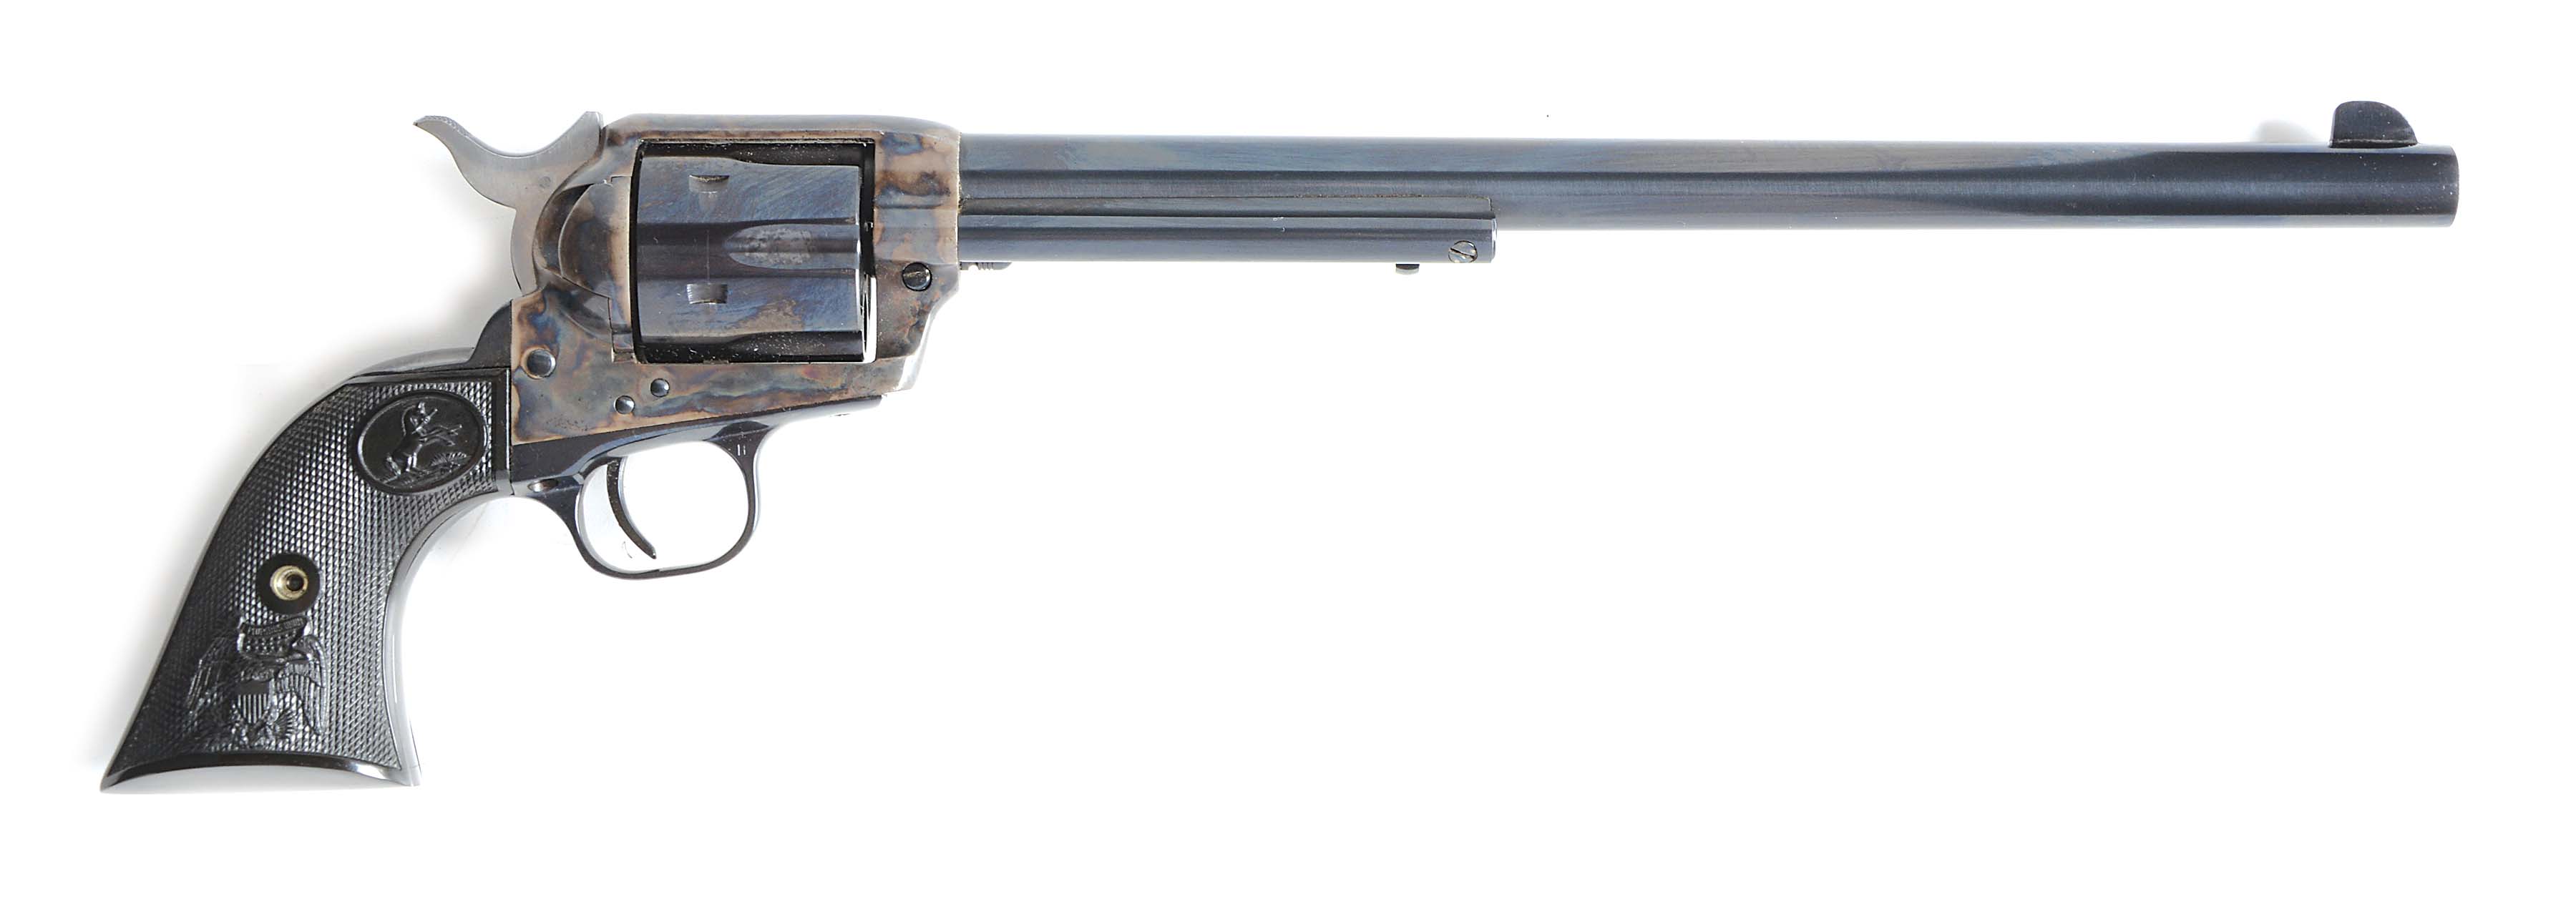 M) colt 3RD generation buntline single action army .45 revolver (1982). 